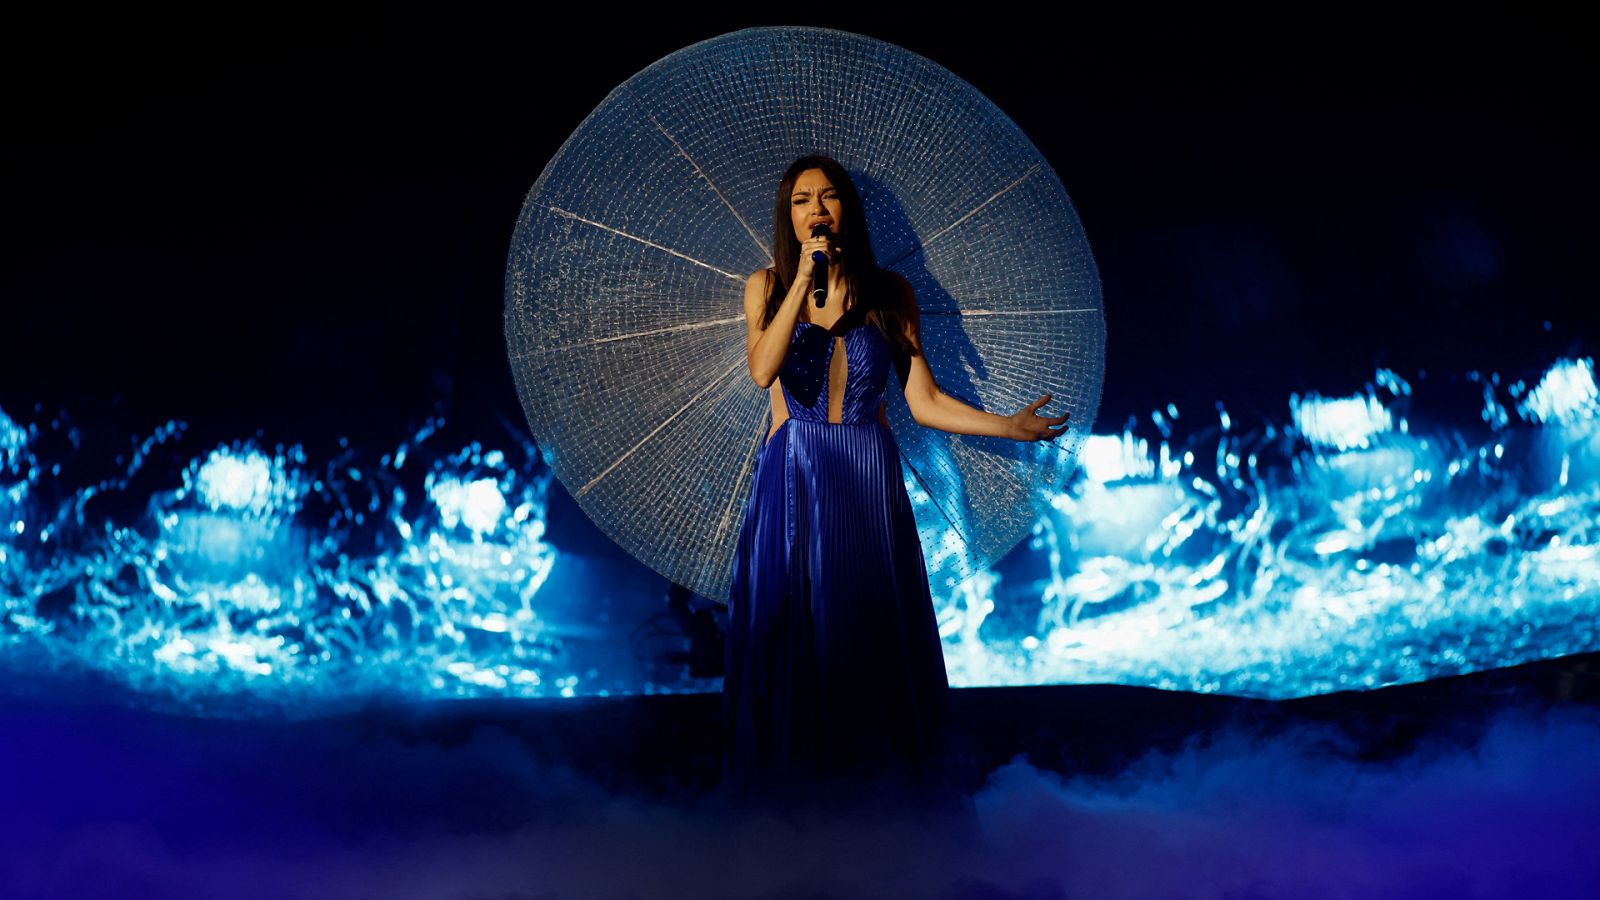 Eurovisión 2022 - Montenegro: Vladana canta "Breathe" en la semifinal 2